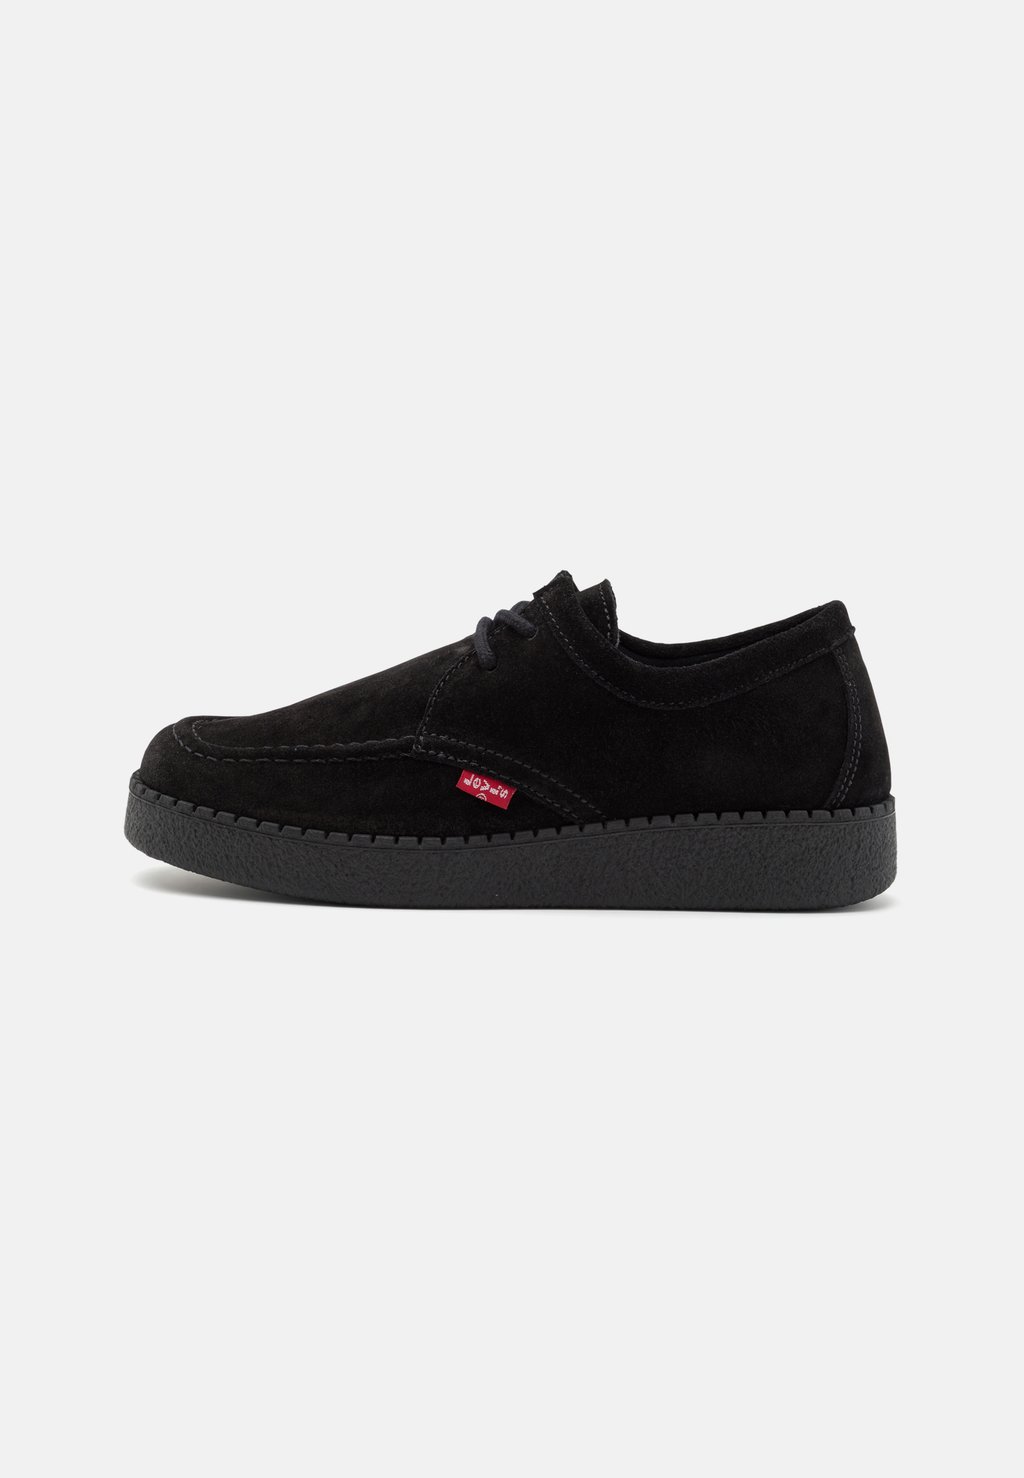 Спортивные туфли на шнуровке RVN LOW RED TAB Levi's, цвет full black цена и фото